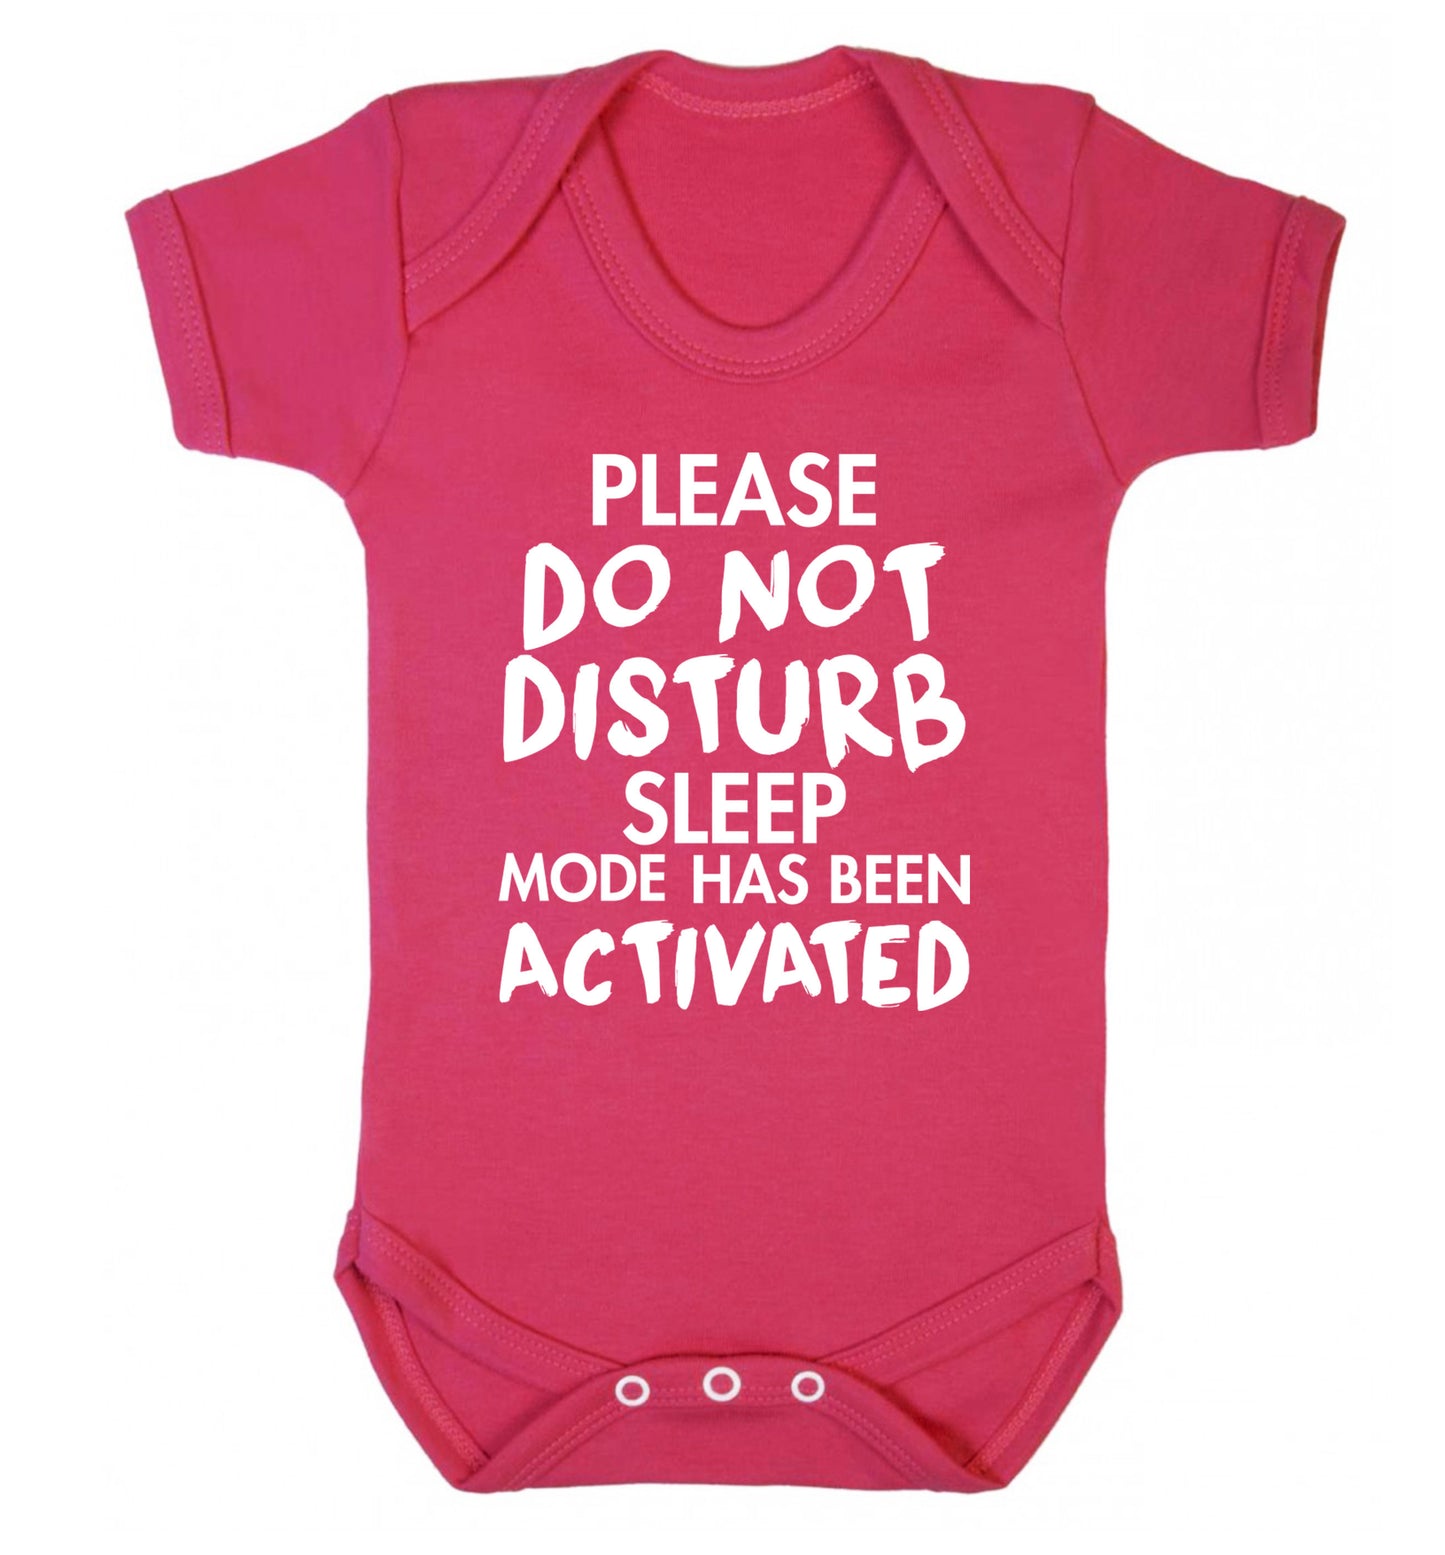 Please do not disturb sleeping mode has been activated Baby Vest dark pink 18-24 months